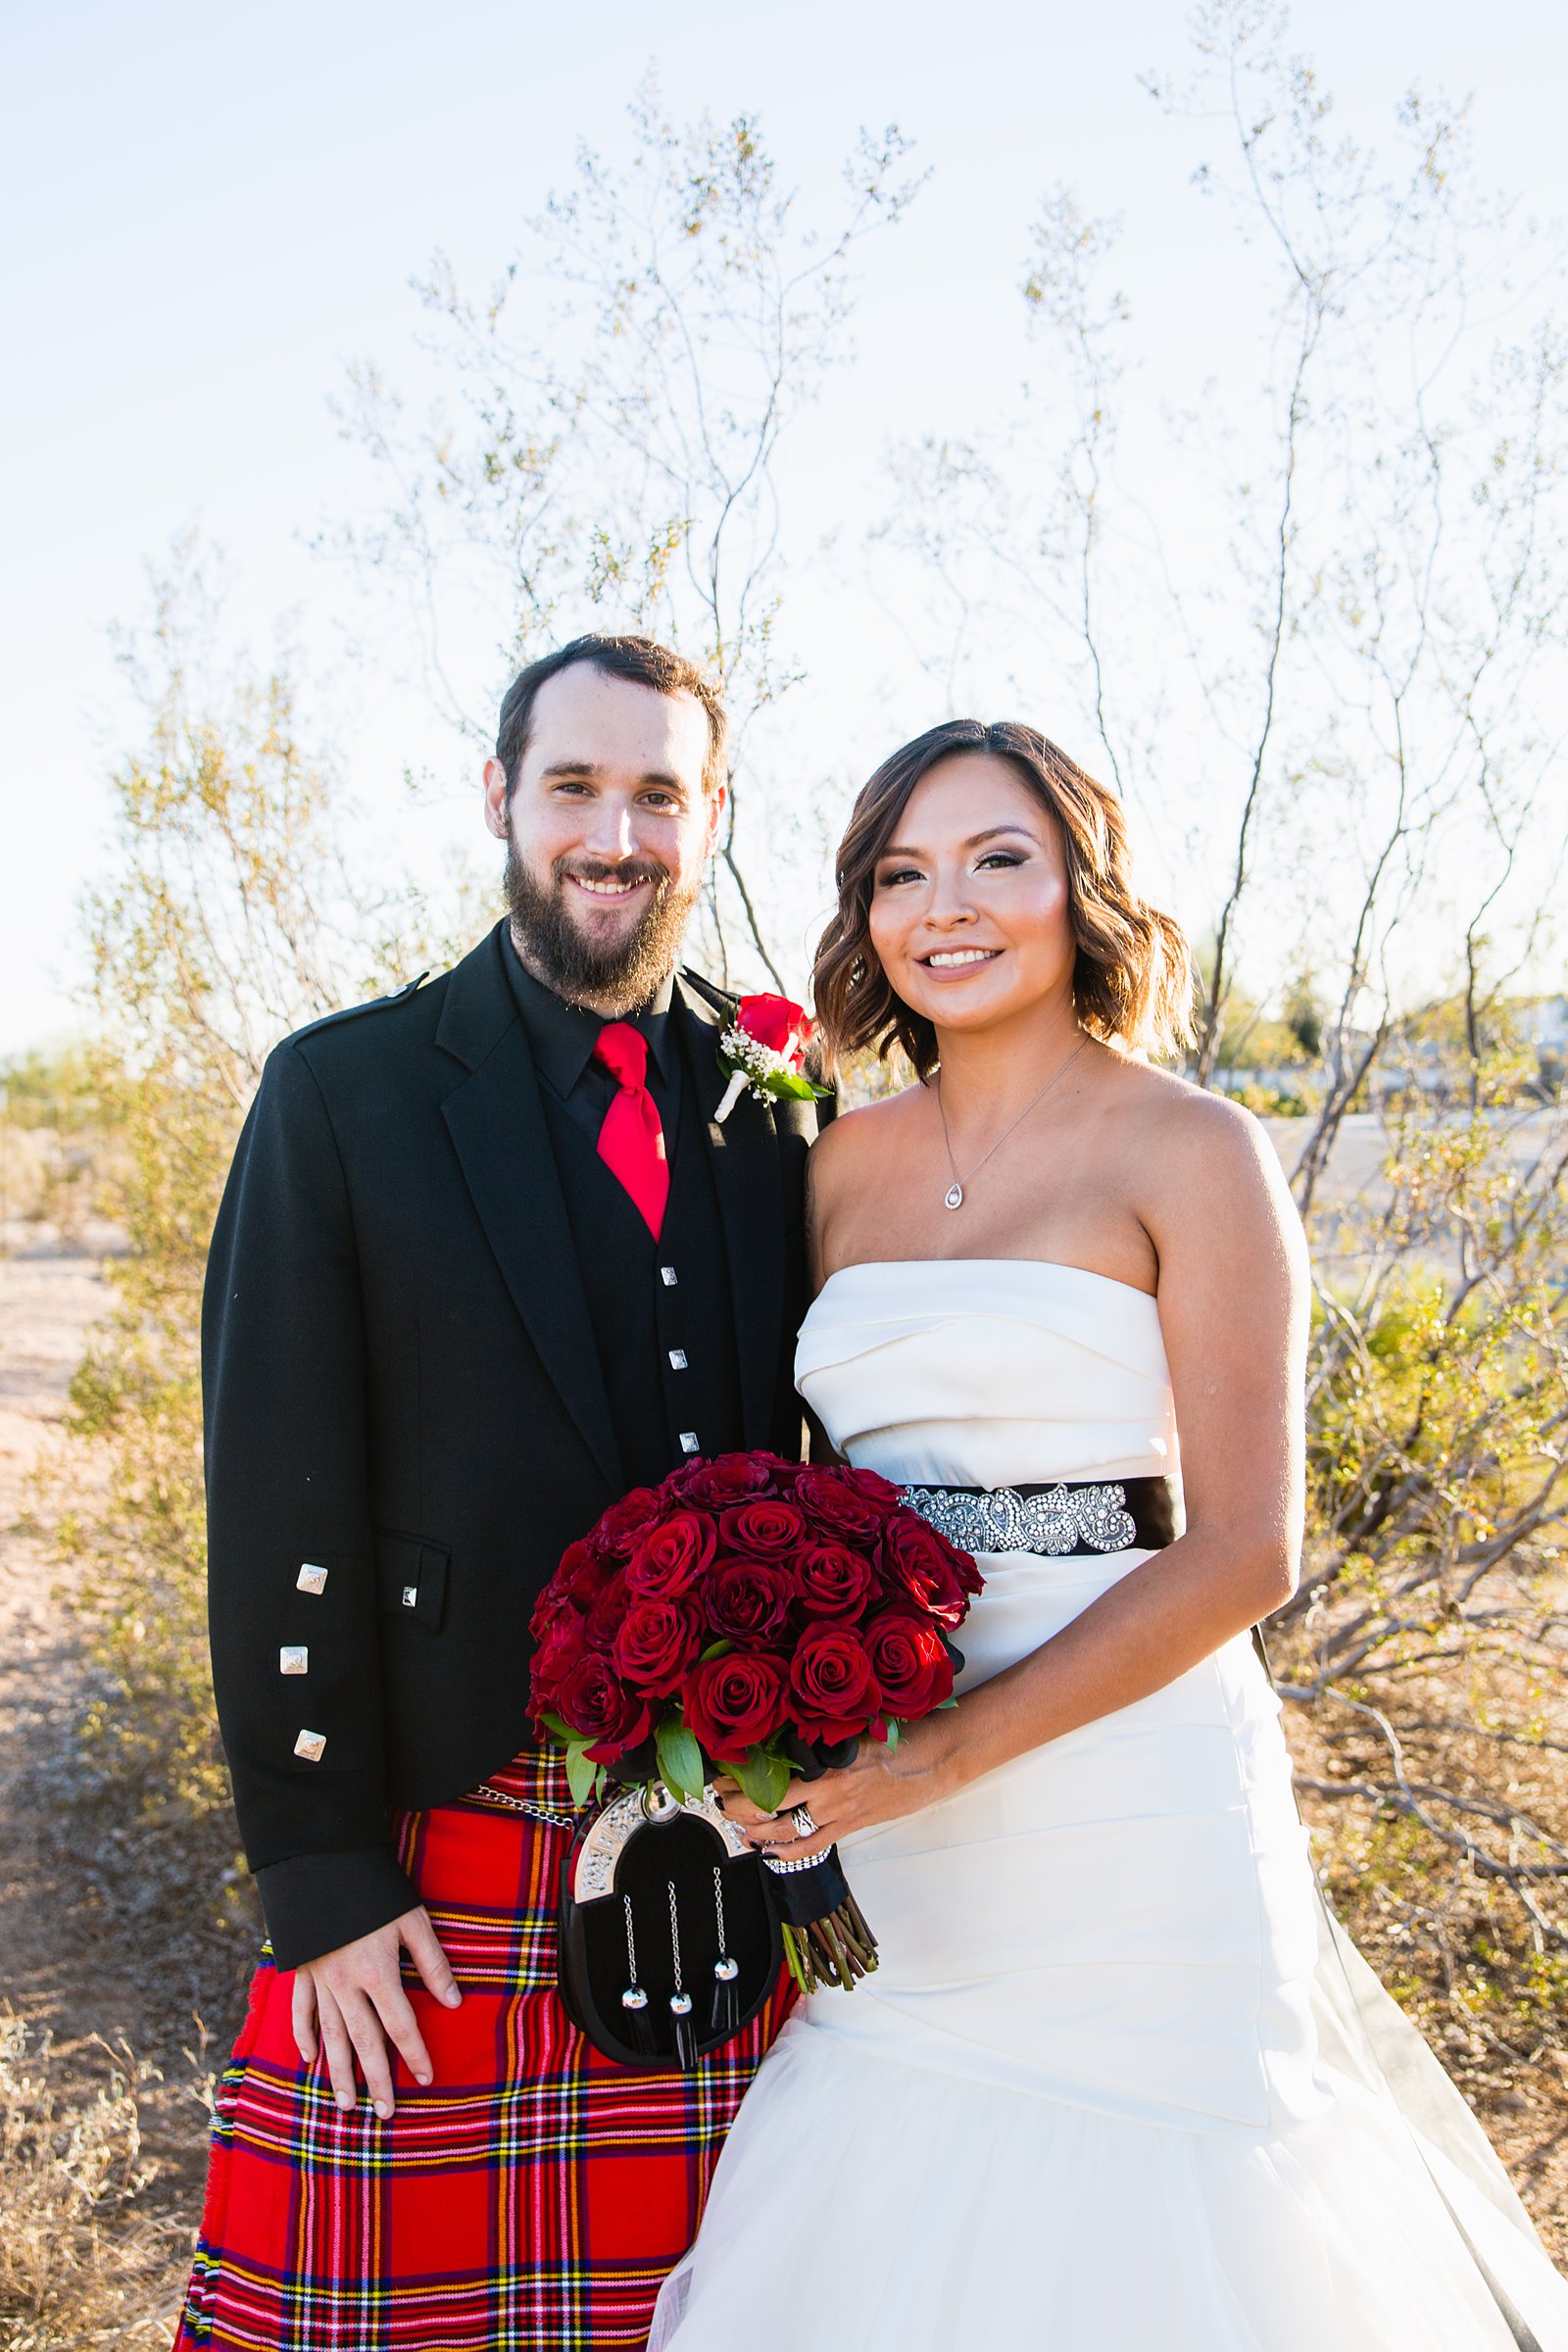 Native bride and groom in kilt on their wedding day by Arizona wedding photographer PMA Photography.